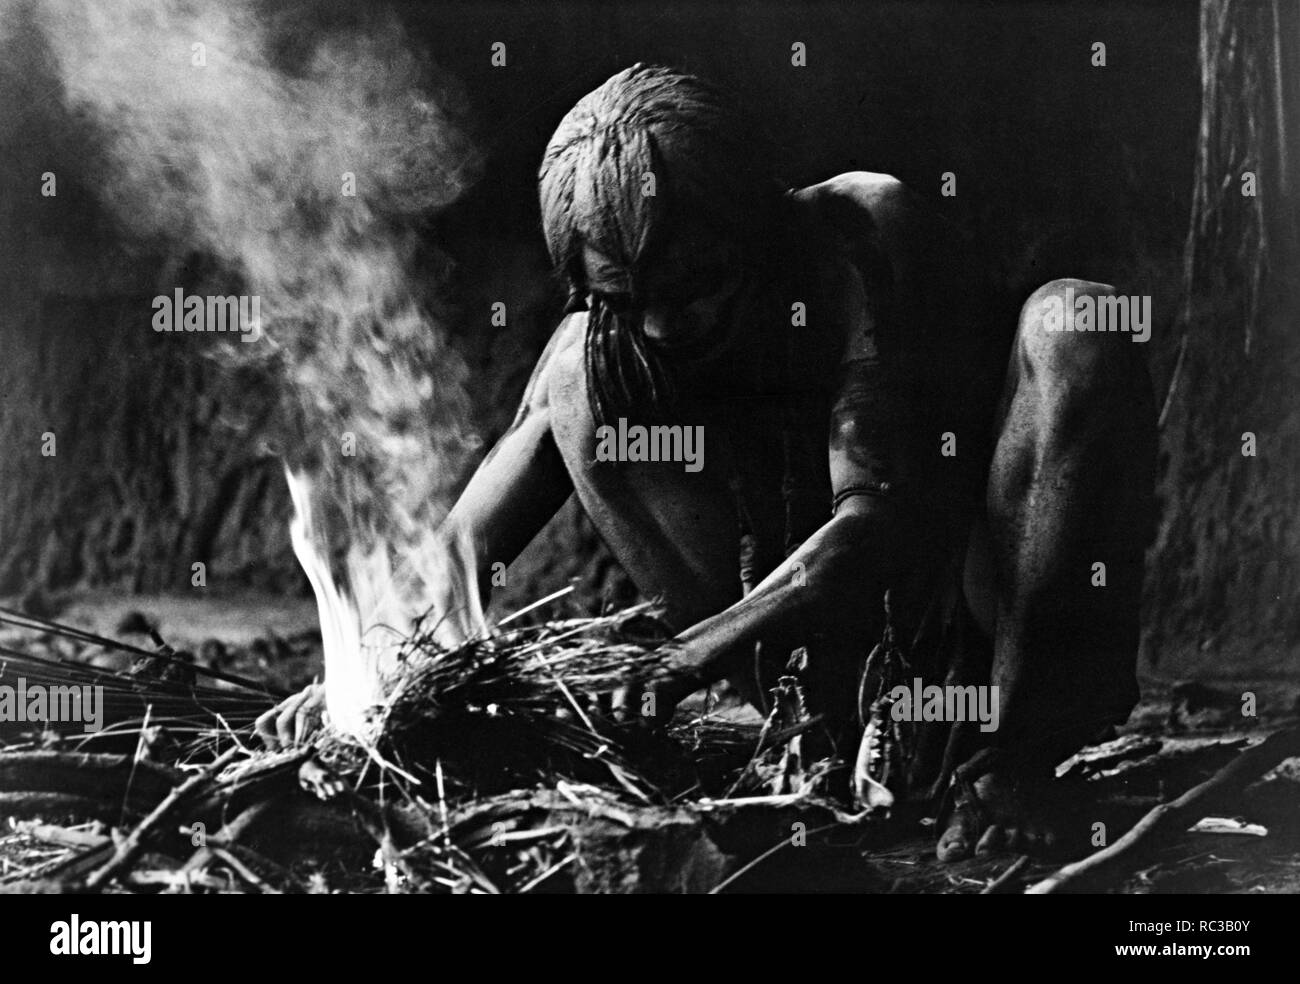 Original film title: LA GUERRE DU FEU. English title: QUEST FOR FIRE. Year: 1981. Director: JEAN-JACQUES ANNAUD. Credit: 20TH CENTURY FOX / Album Stock Photo